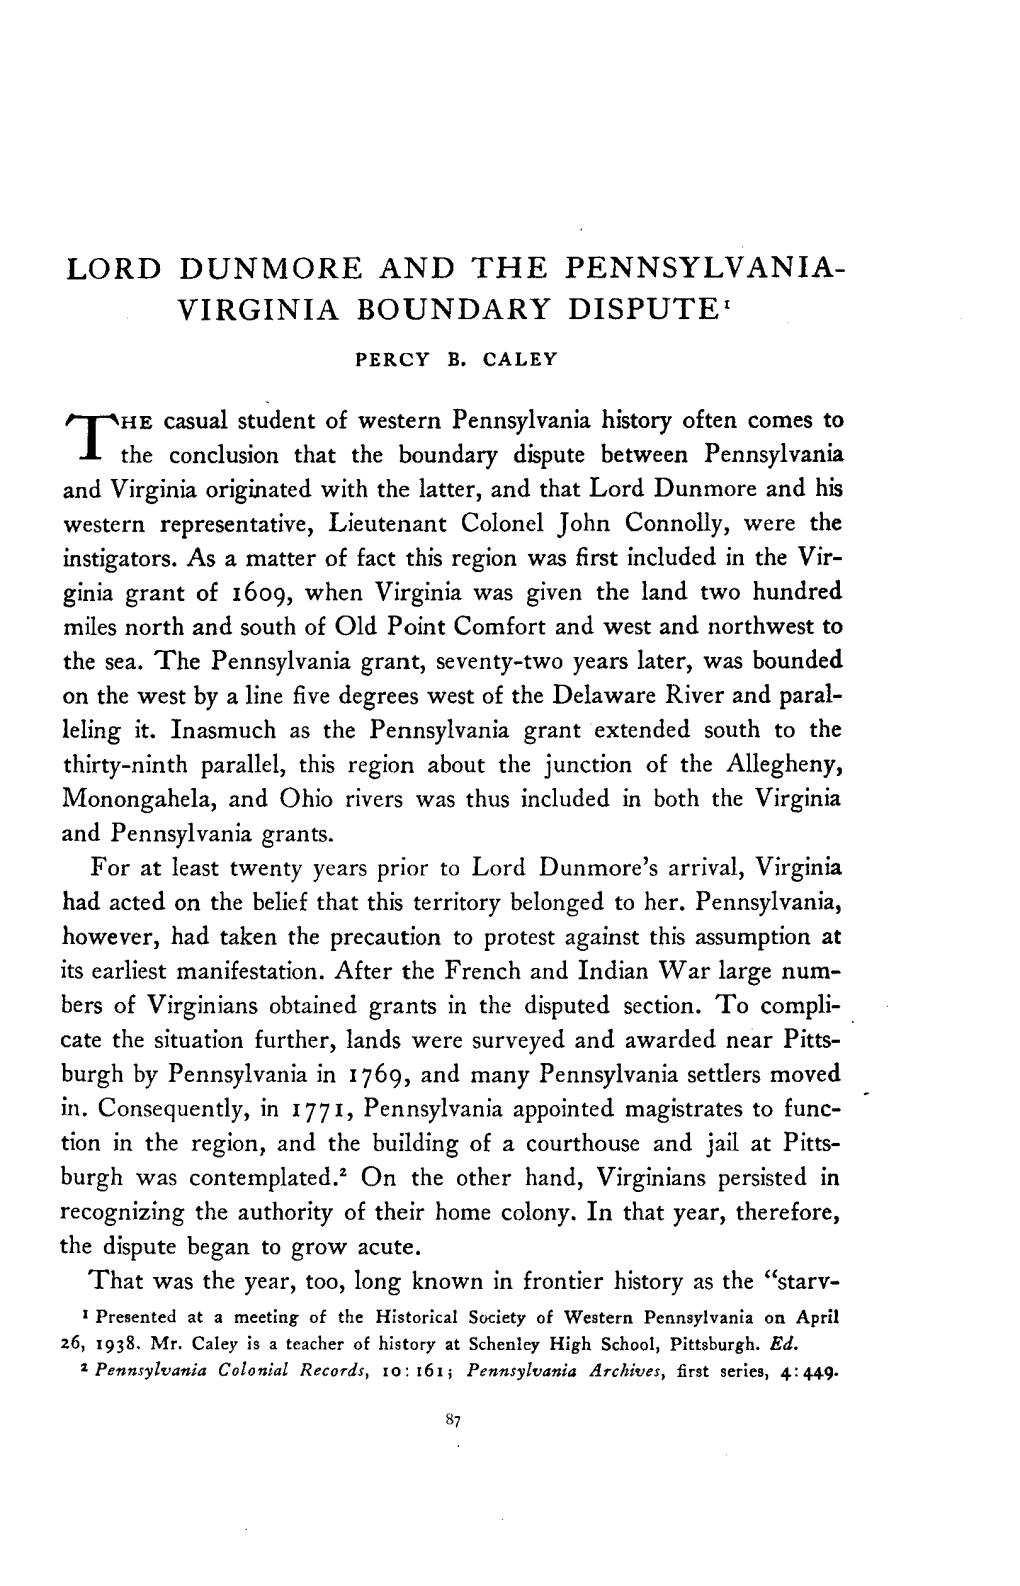 Lord Dunmore and the Pennsylvania- Virginia Boundary Dispute 1